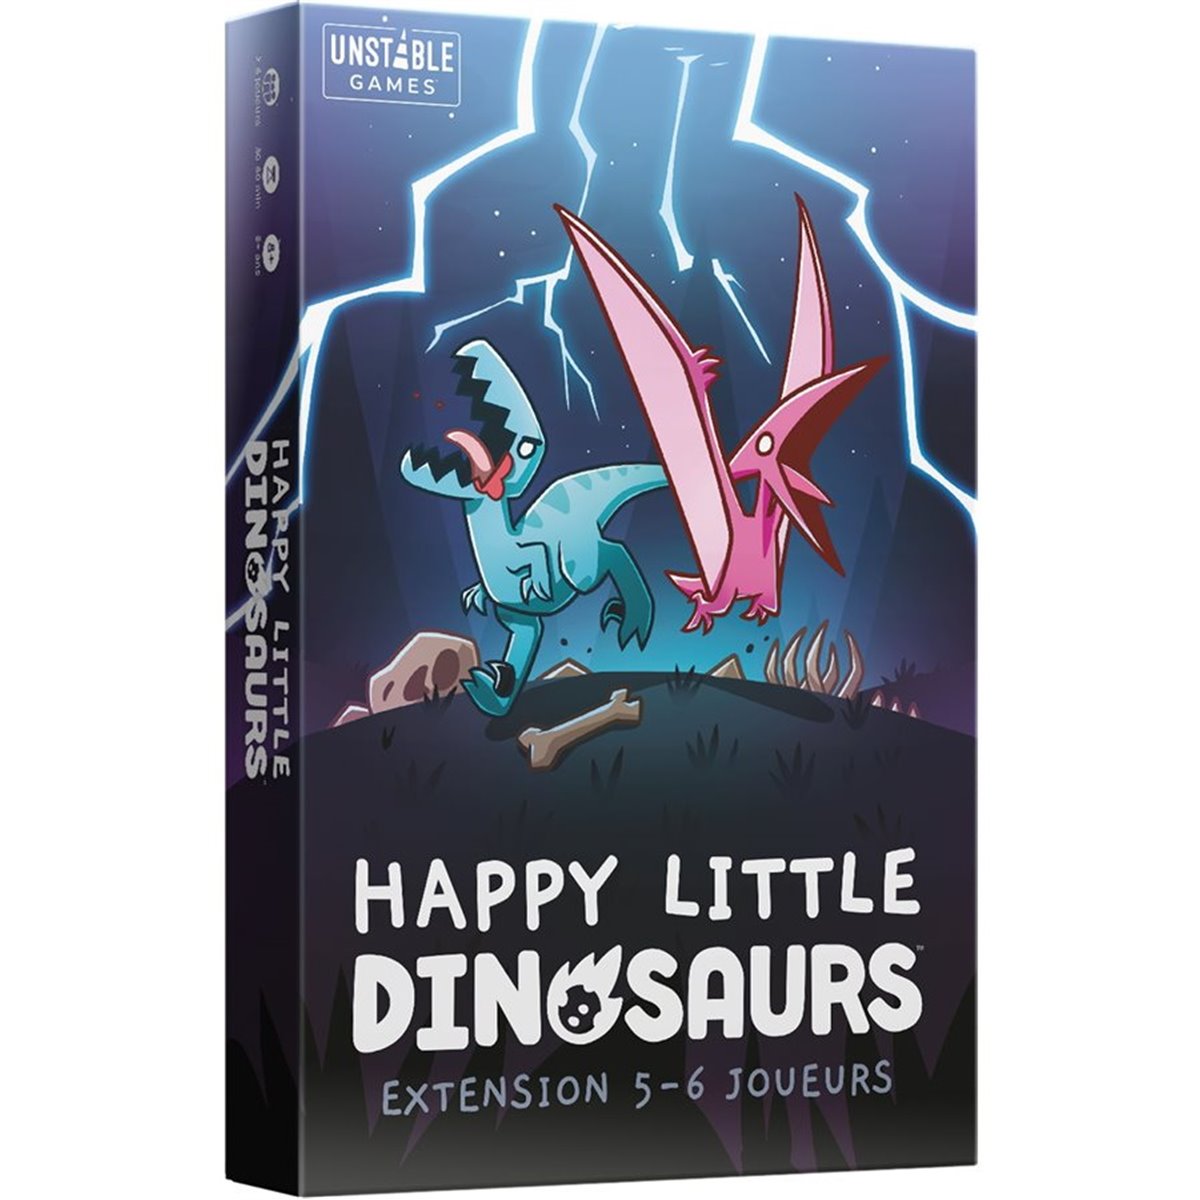 Happy Little Dinosaurs - Rencards Catastrophiques